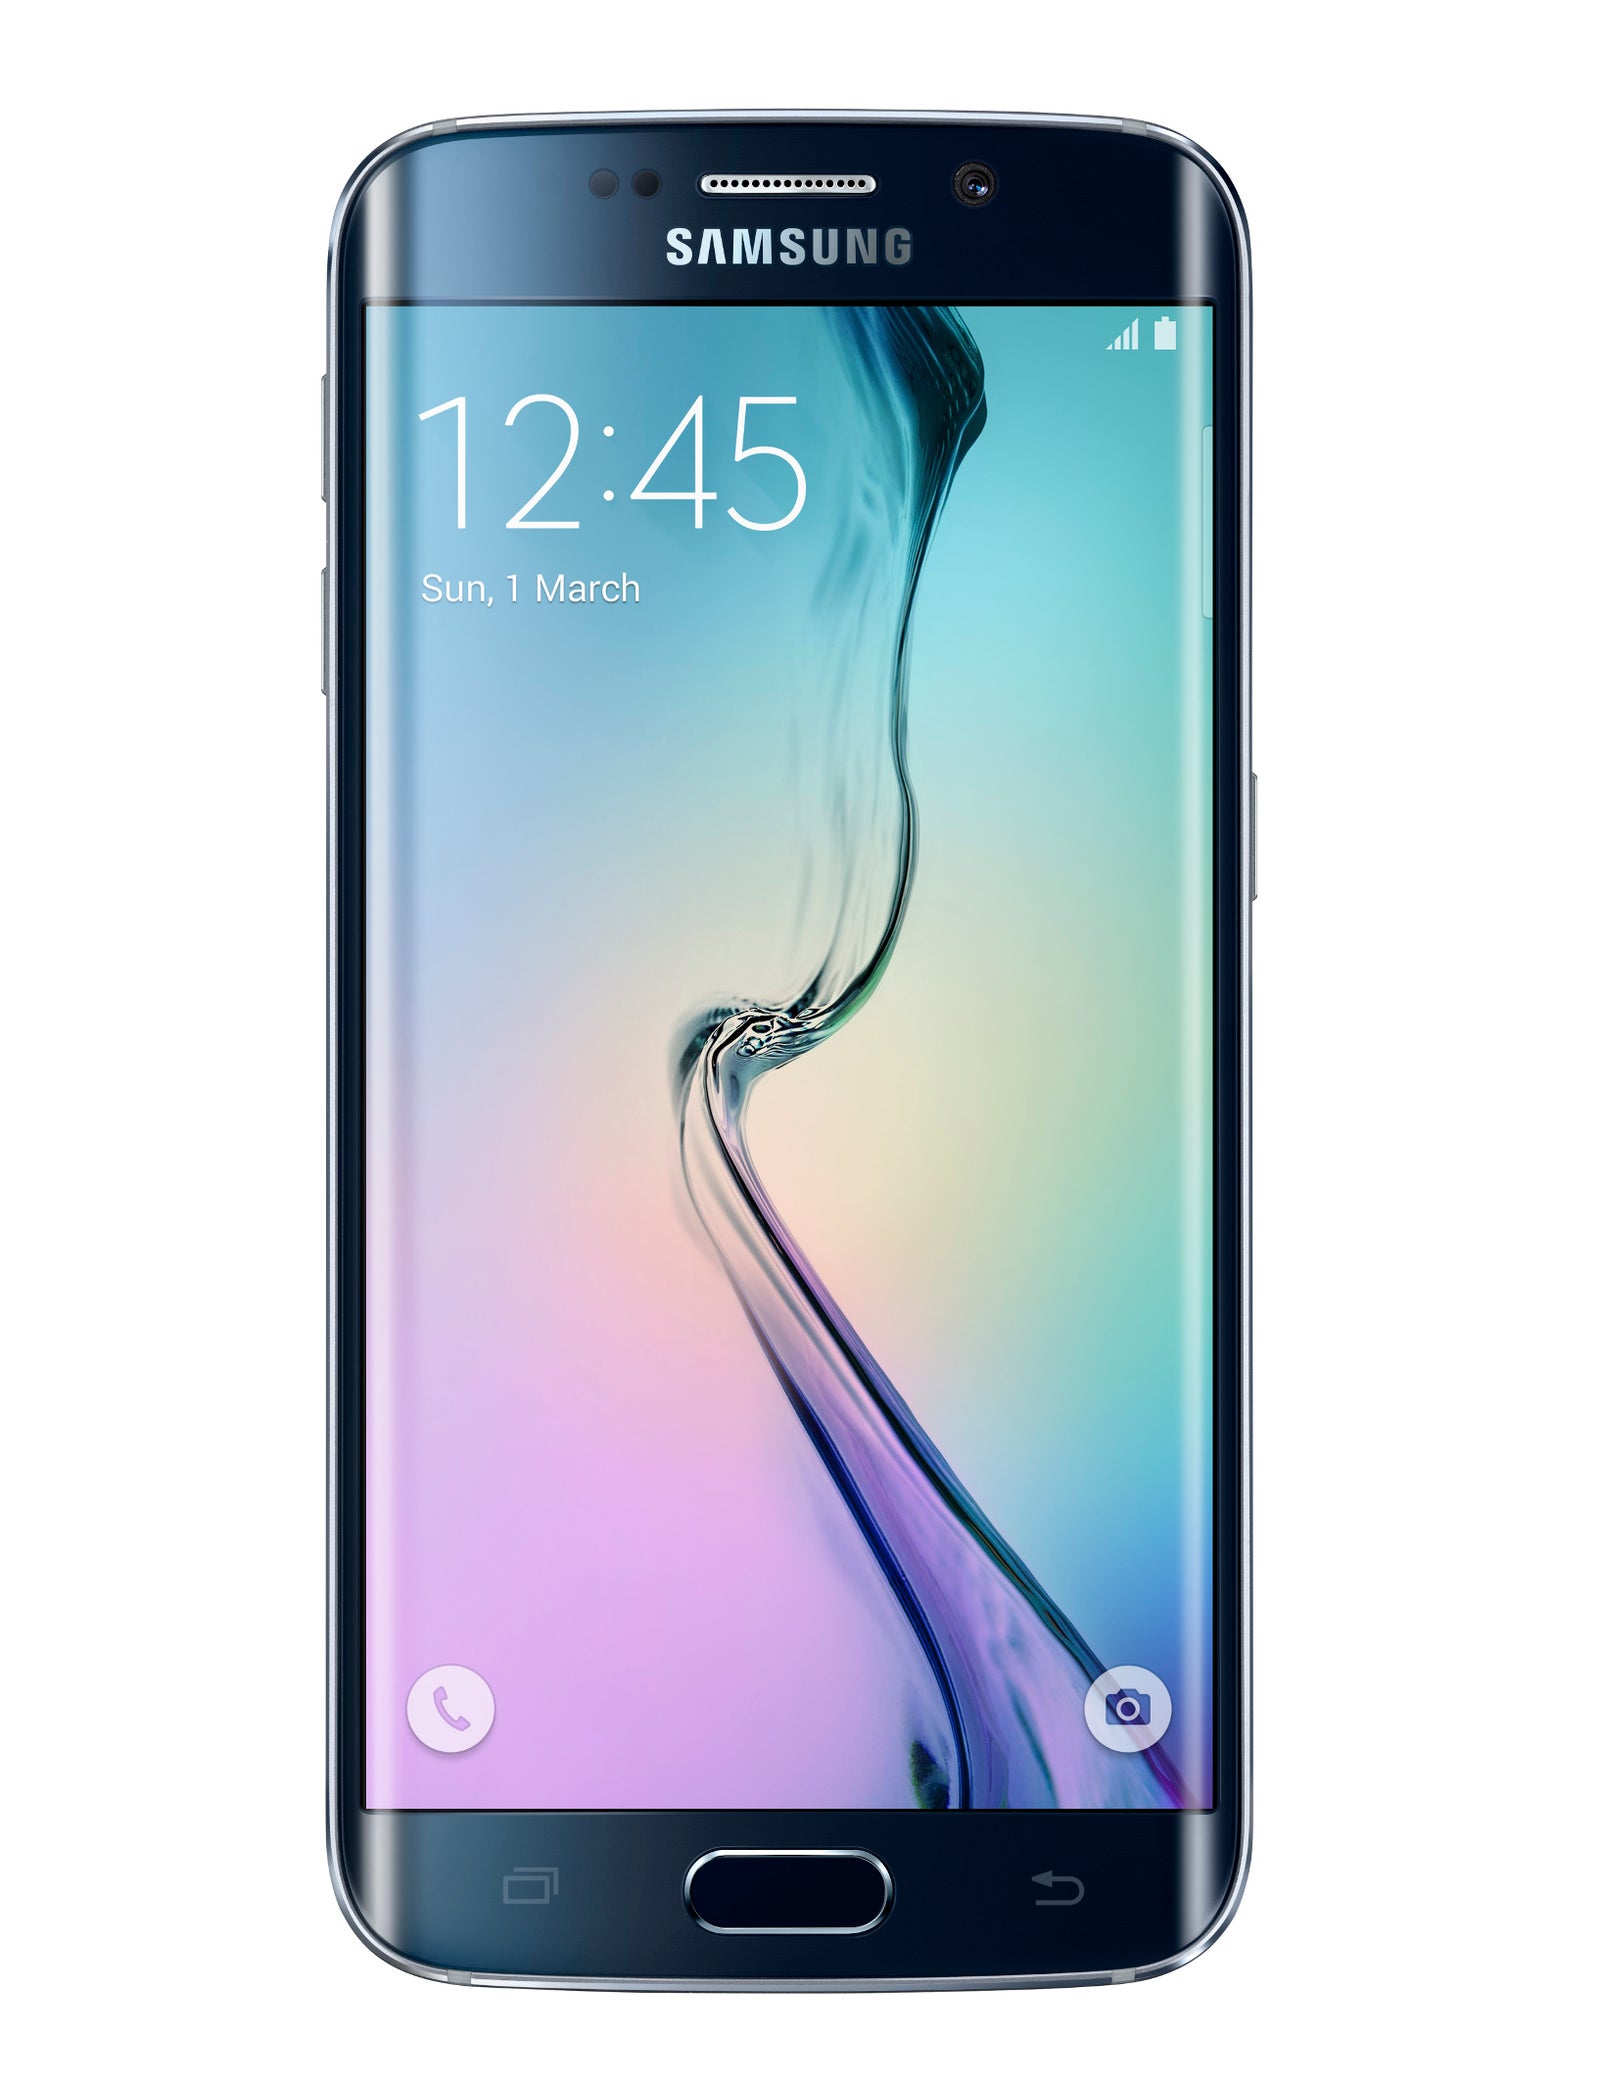 Samsung Galaxy S6 edge specs - PhoneArena